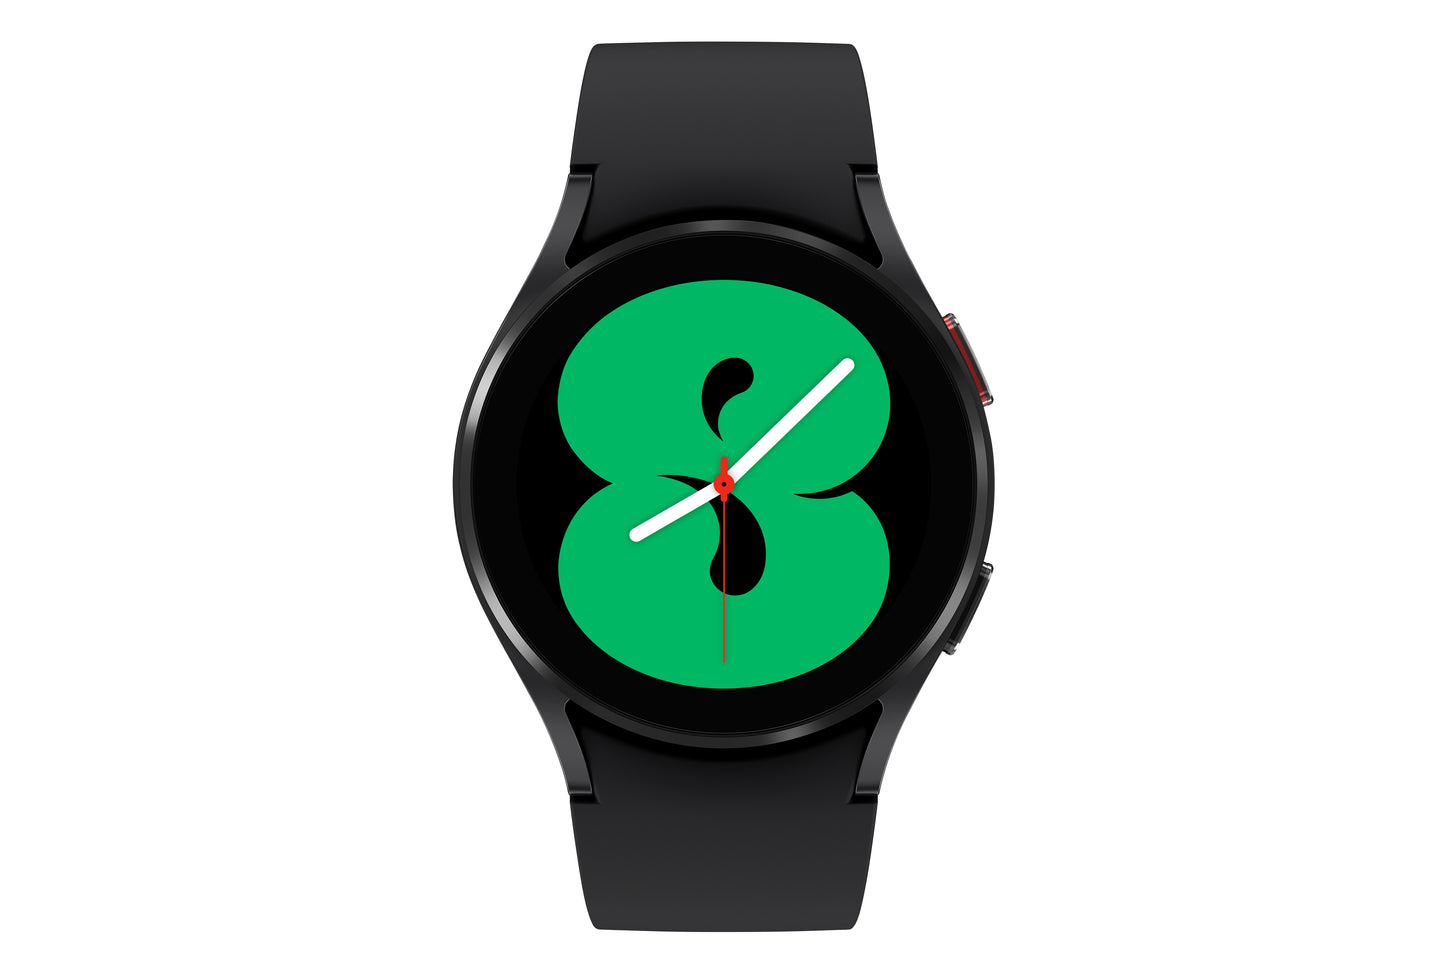 SAMSUNG Galaxy Watch 4 - 40mm BT - Black - SM-R860NZKAXAA